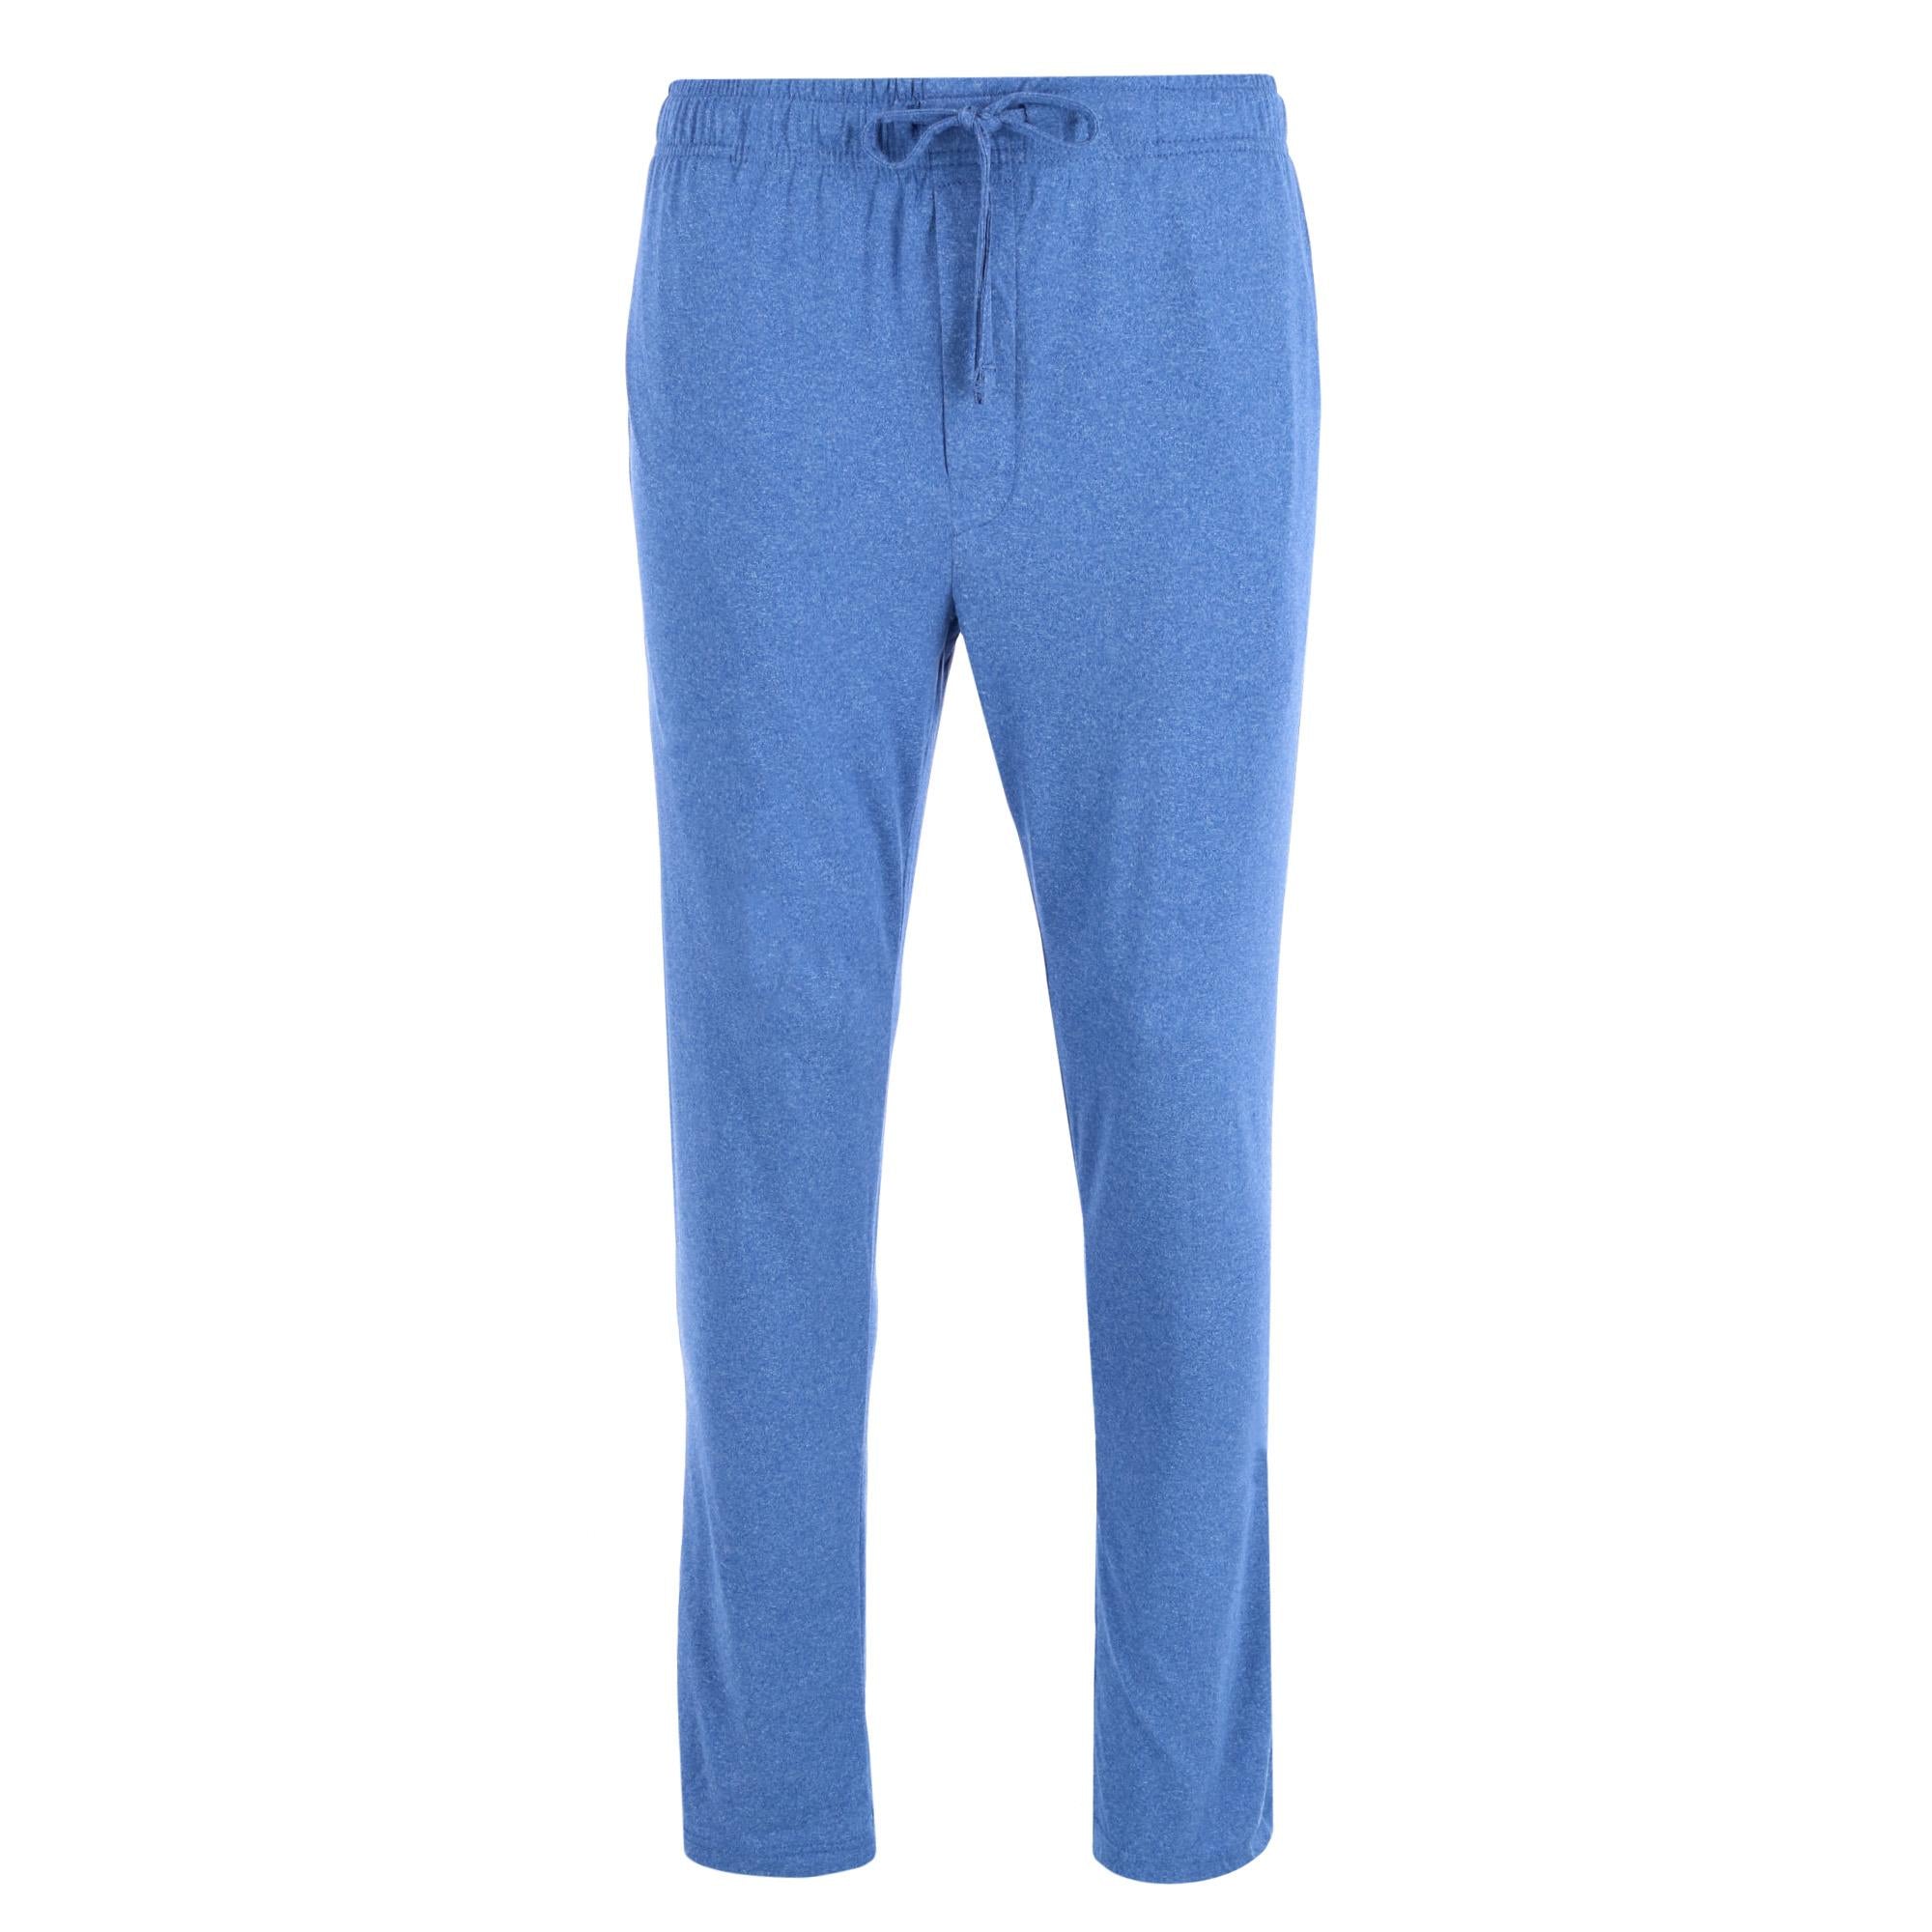 Hanes Men's Jogger Size 2XL Sweatpants Lounge Pants Pajama